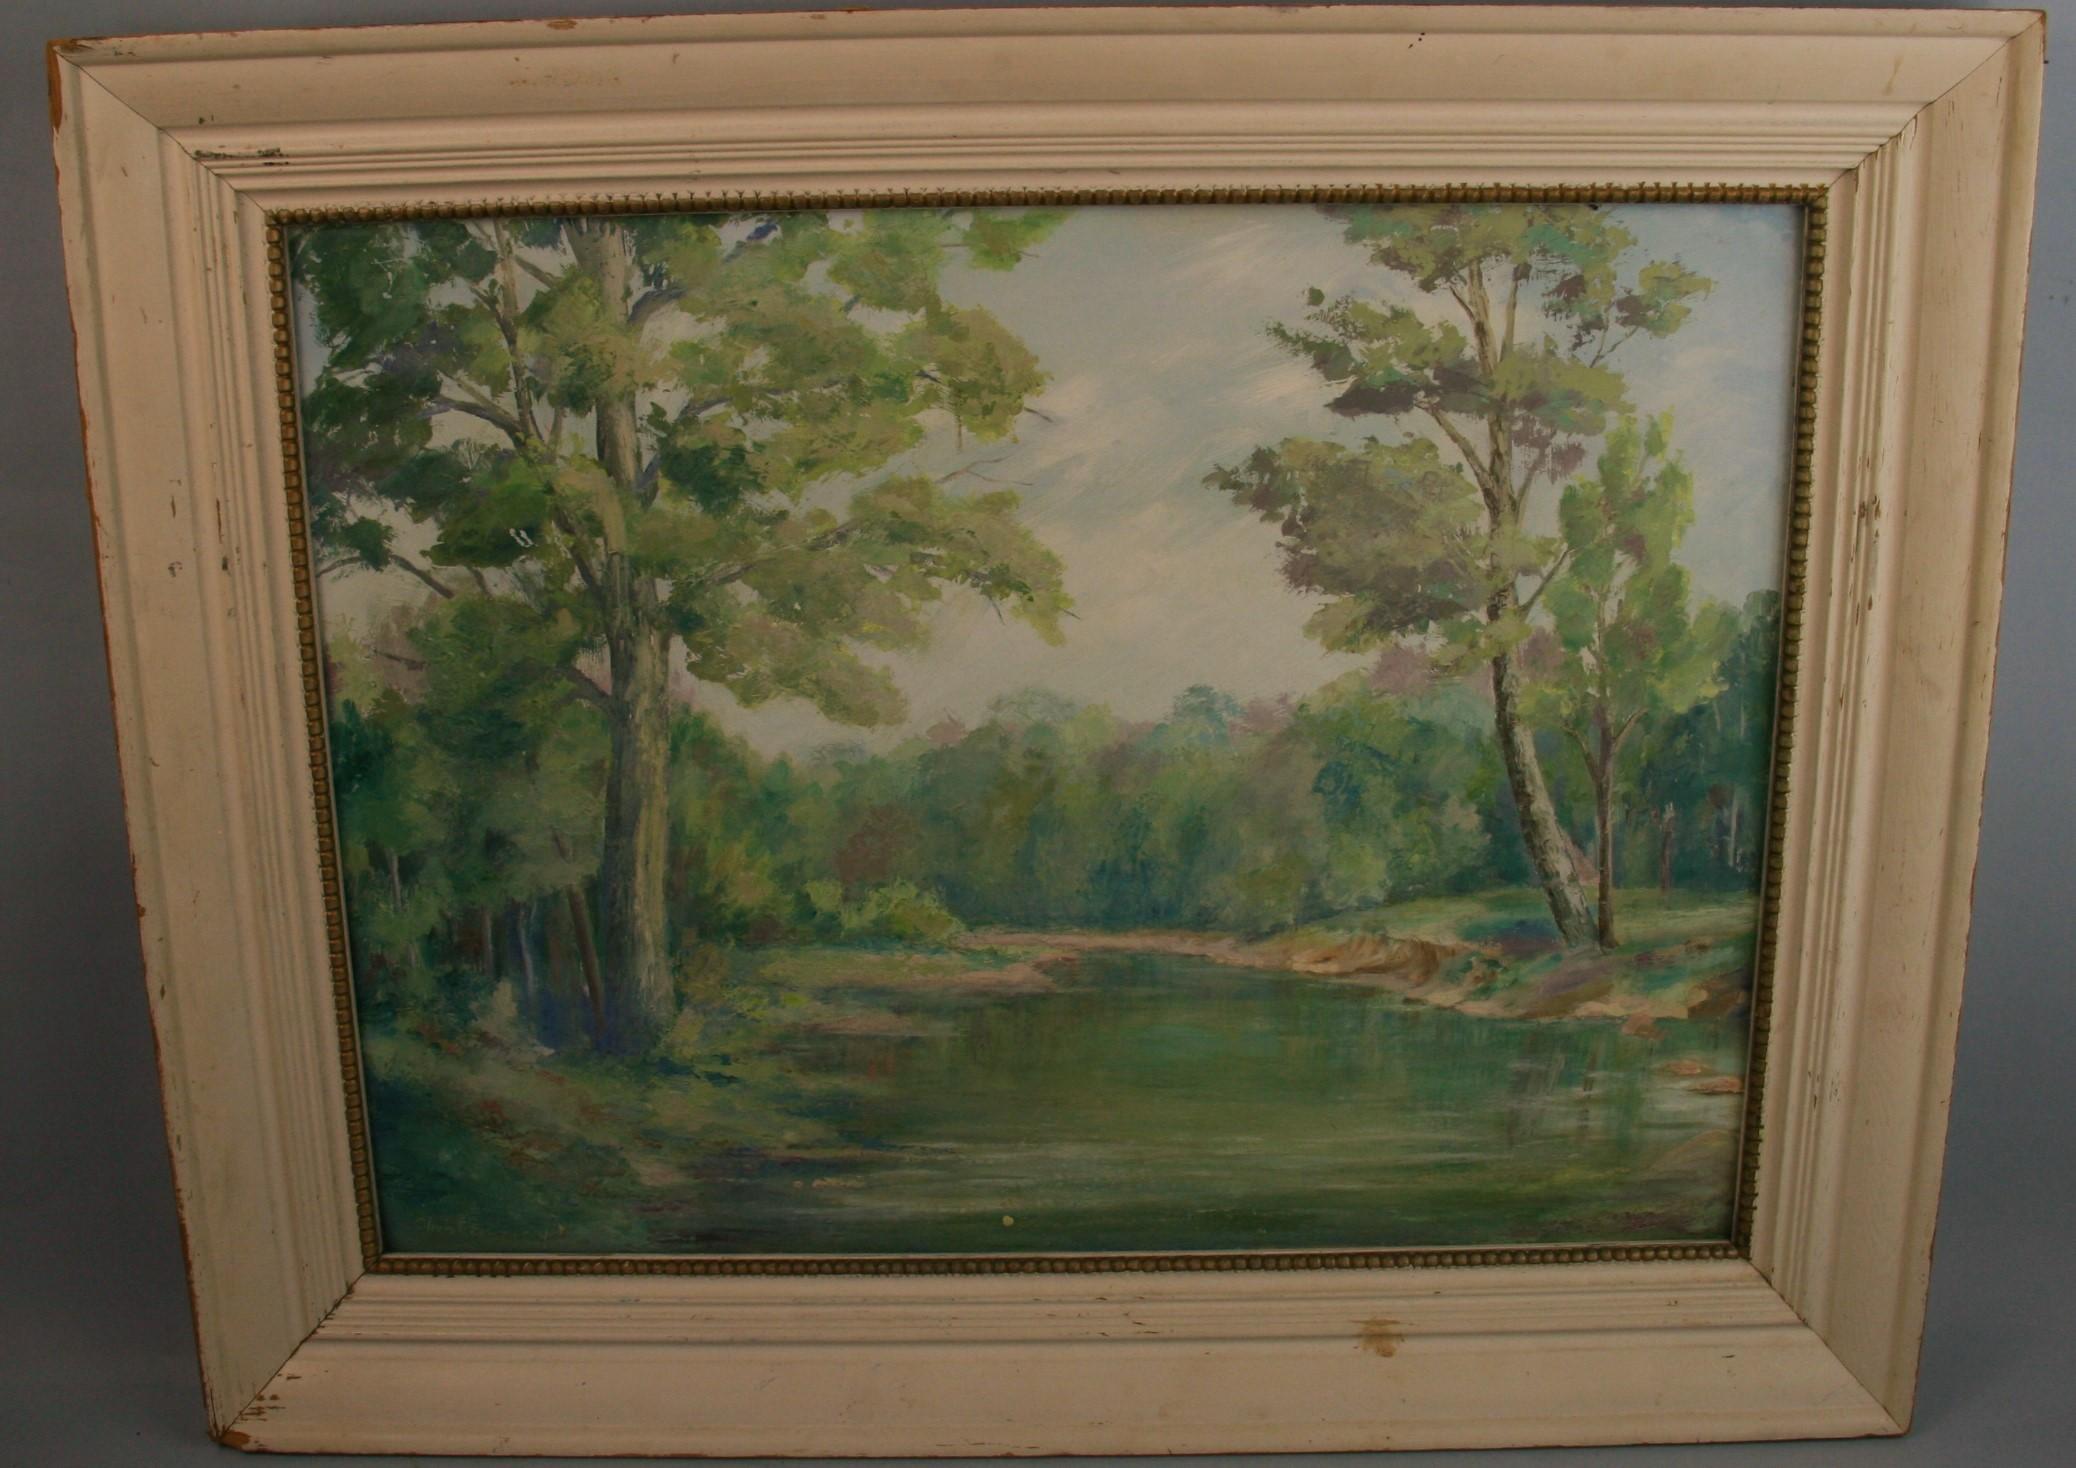 5-3758 Oil on artist board of an English  landscape
Set in a vintage wood frame
Image size 23x18